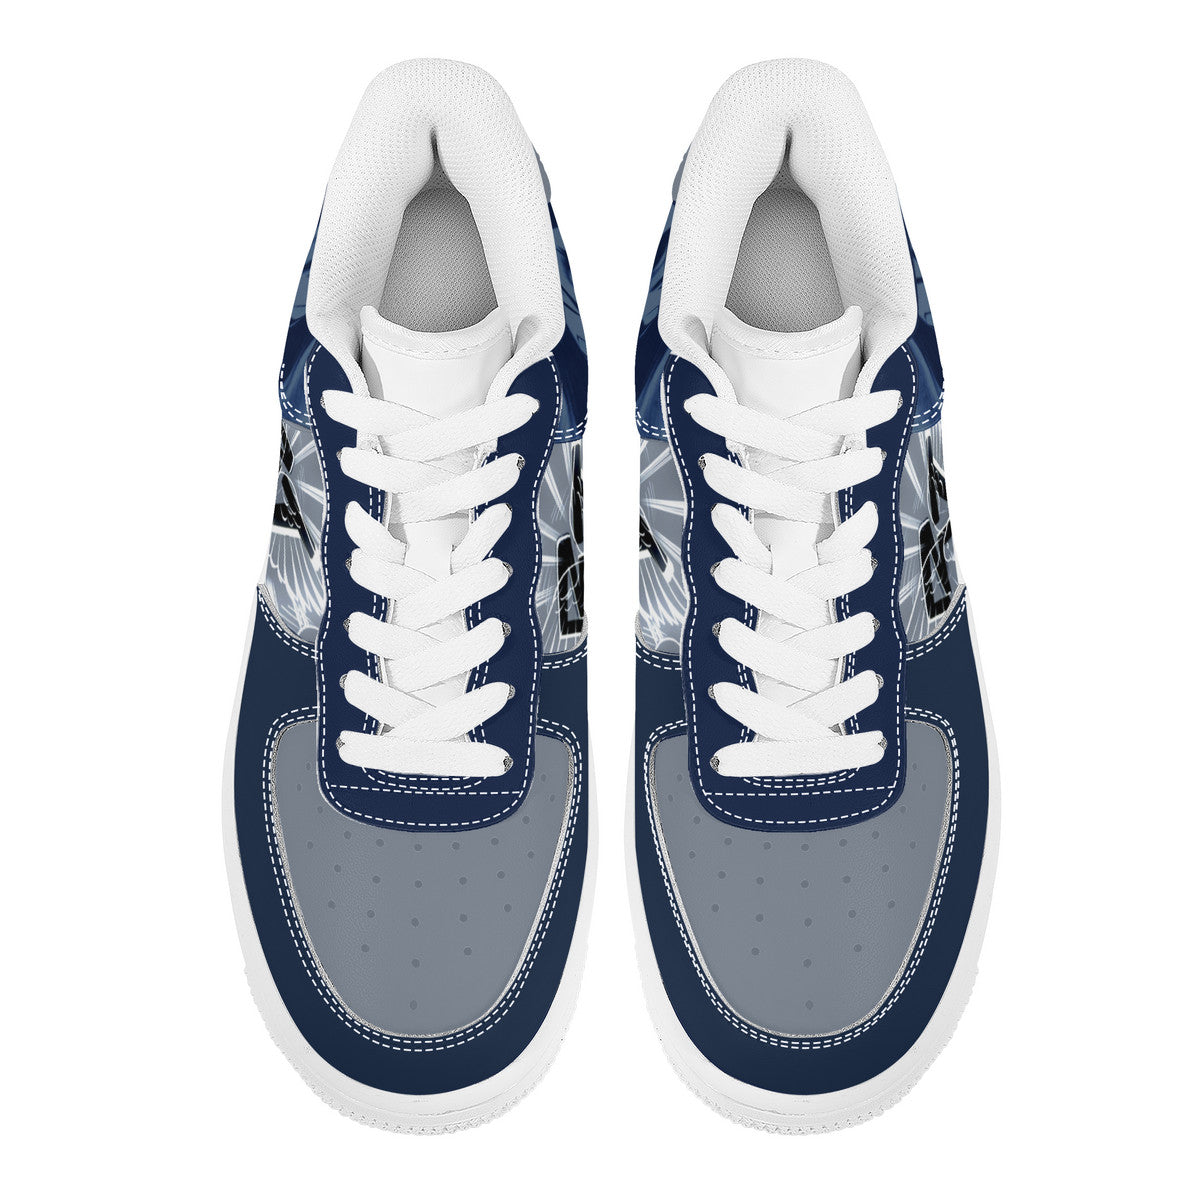 RVT Low Top Unisex Sneaker- Black/blue